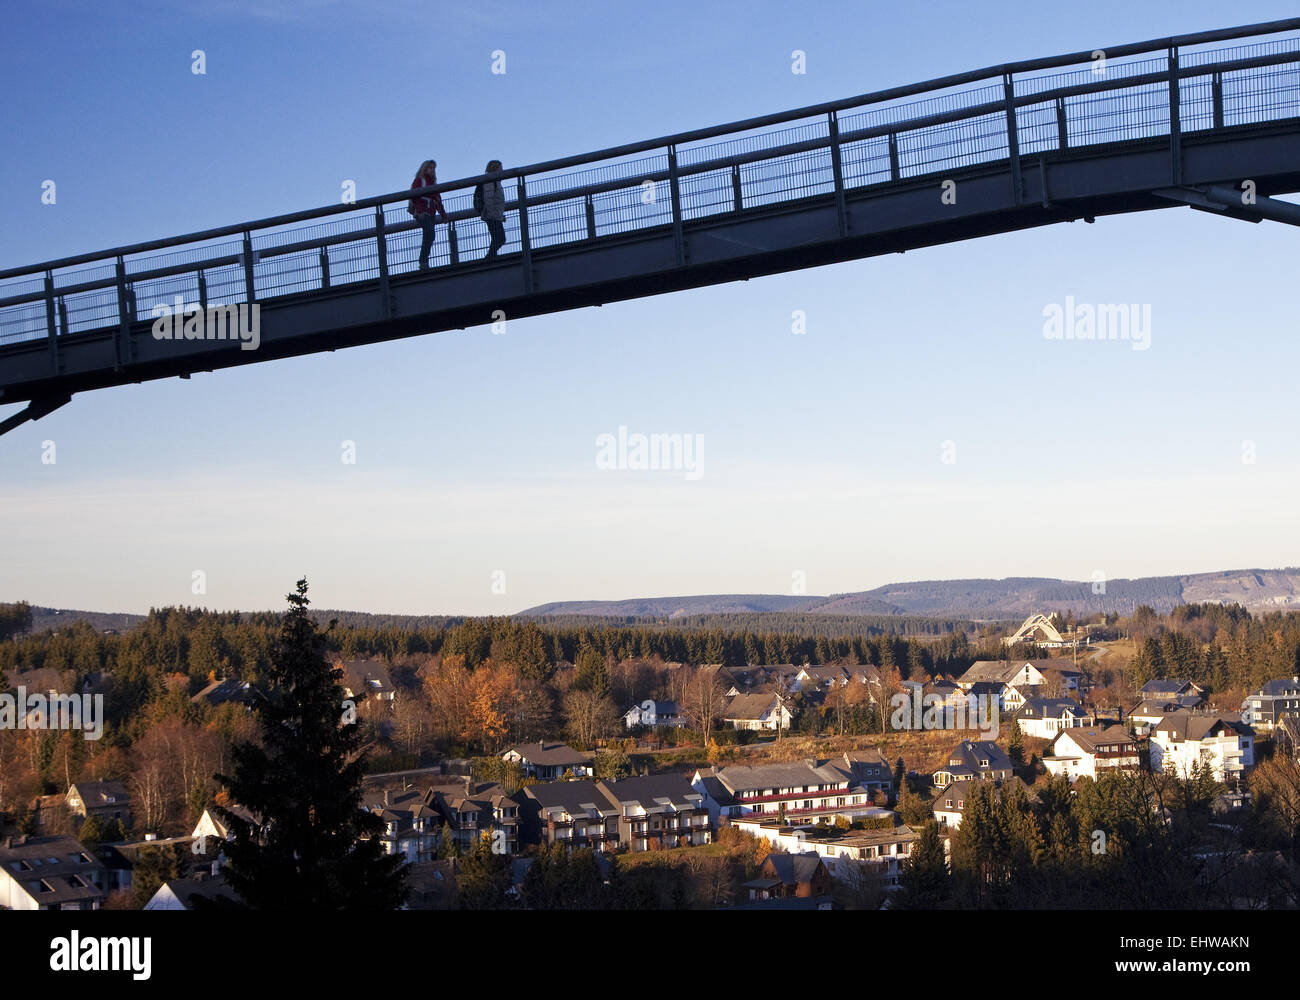 The Panorama Adventure Bridge in Winterberg. Stock Photo